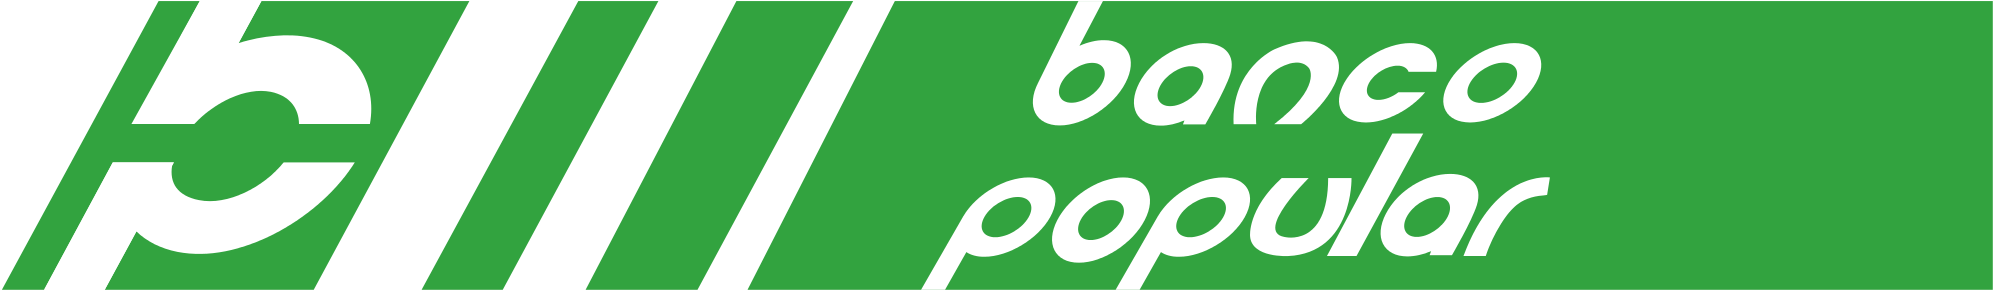 Download Logo Del Banco Popular Clipart Png Download - PikPng